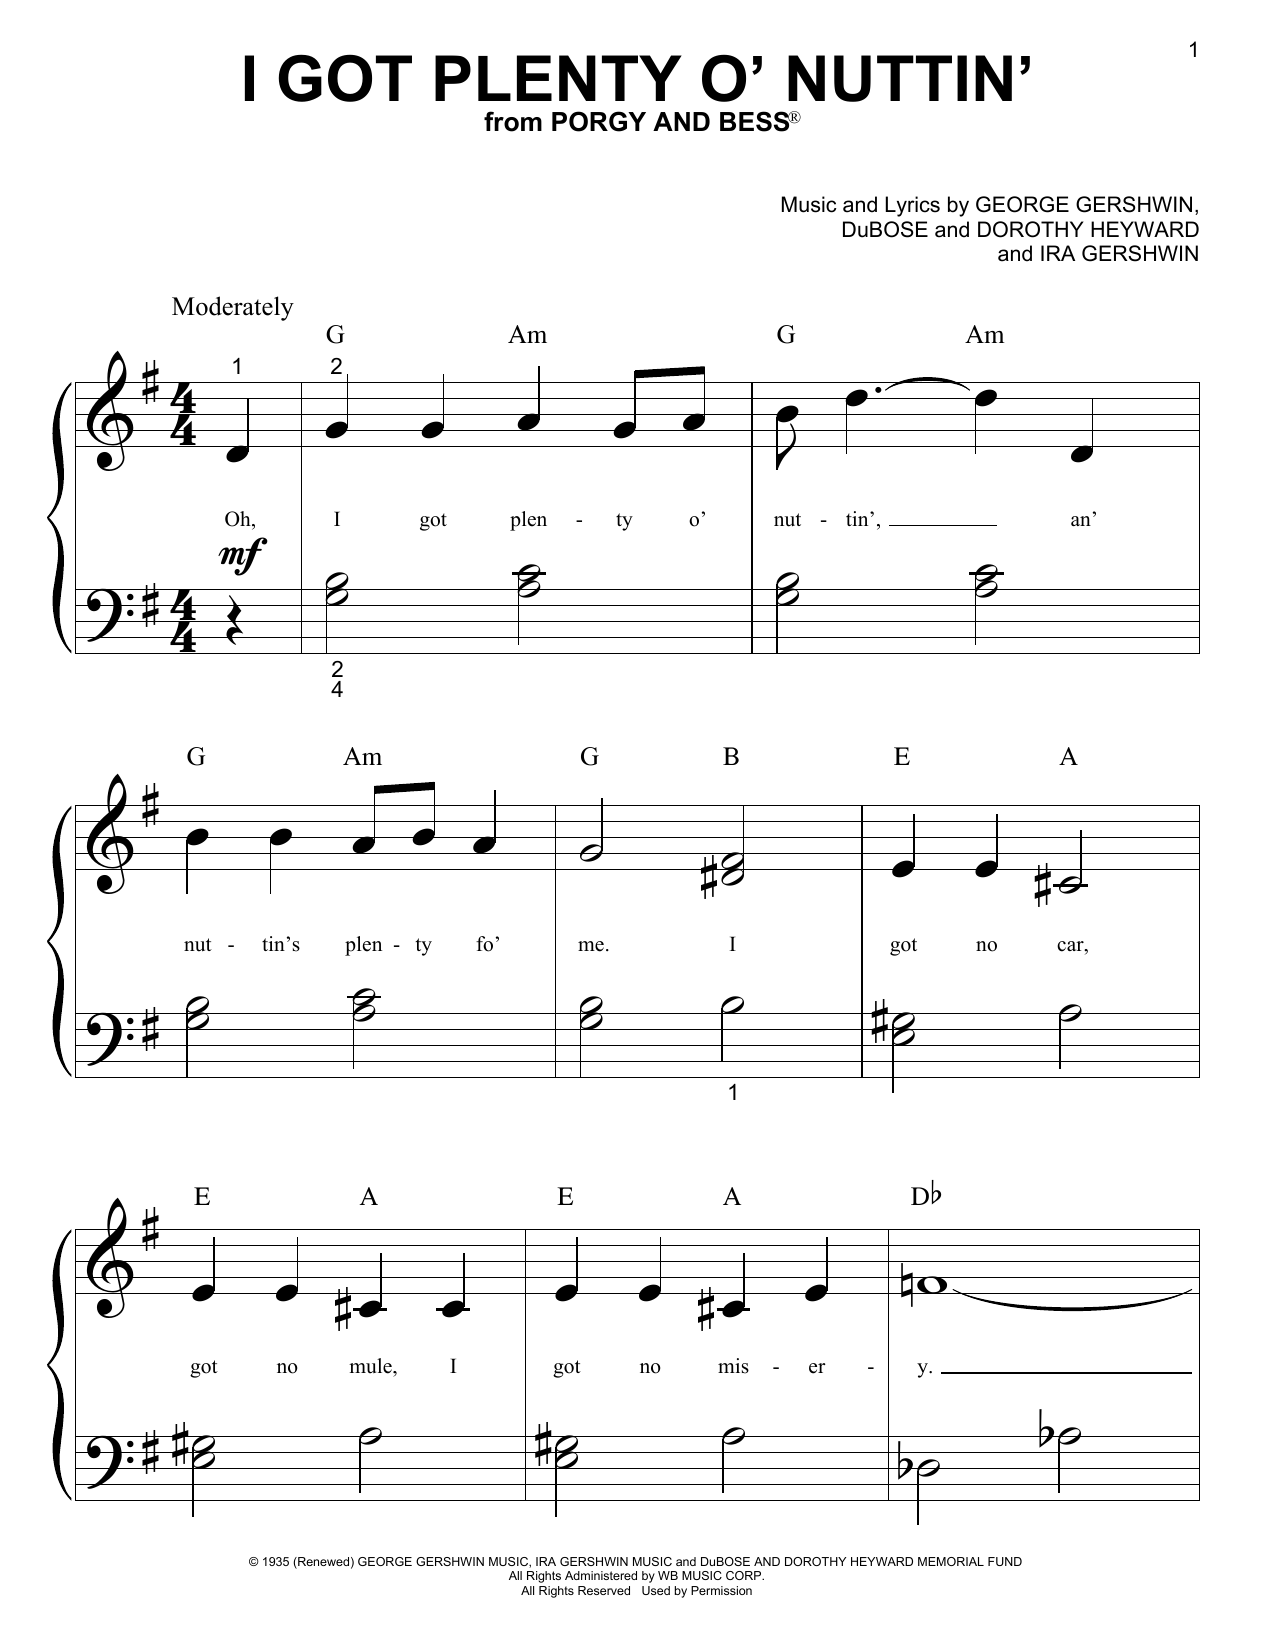 George Gershwin I Got Plenty O' Nuttin' Sheet Music Notes & Chords for Flute - Download or Print PDF